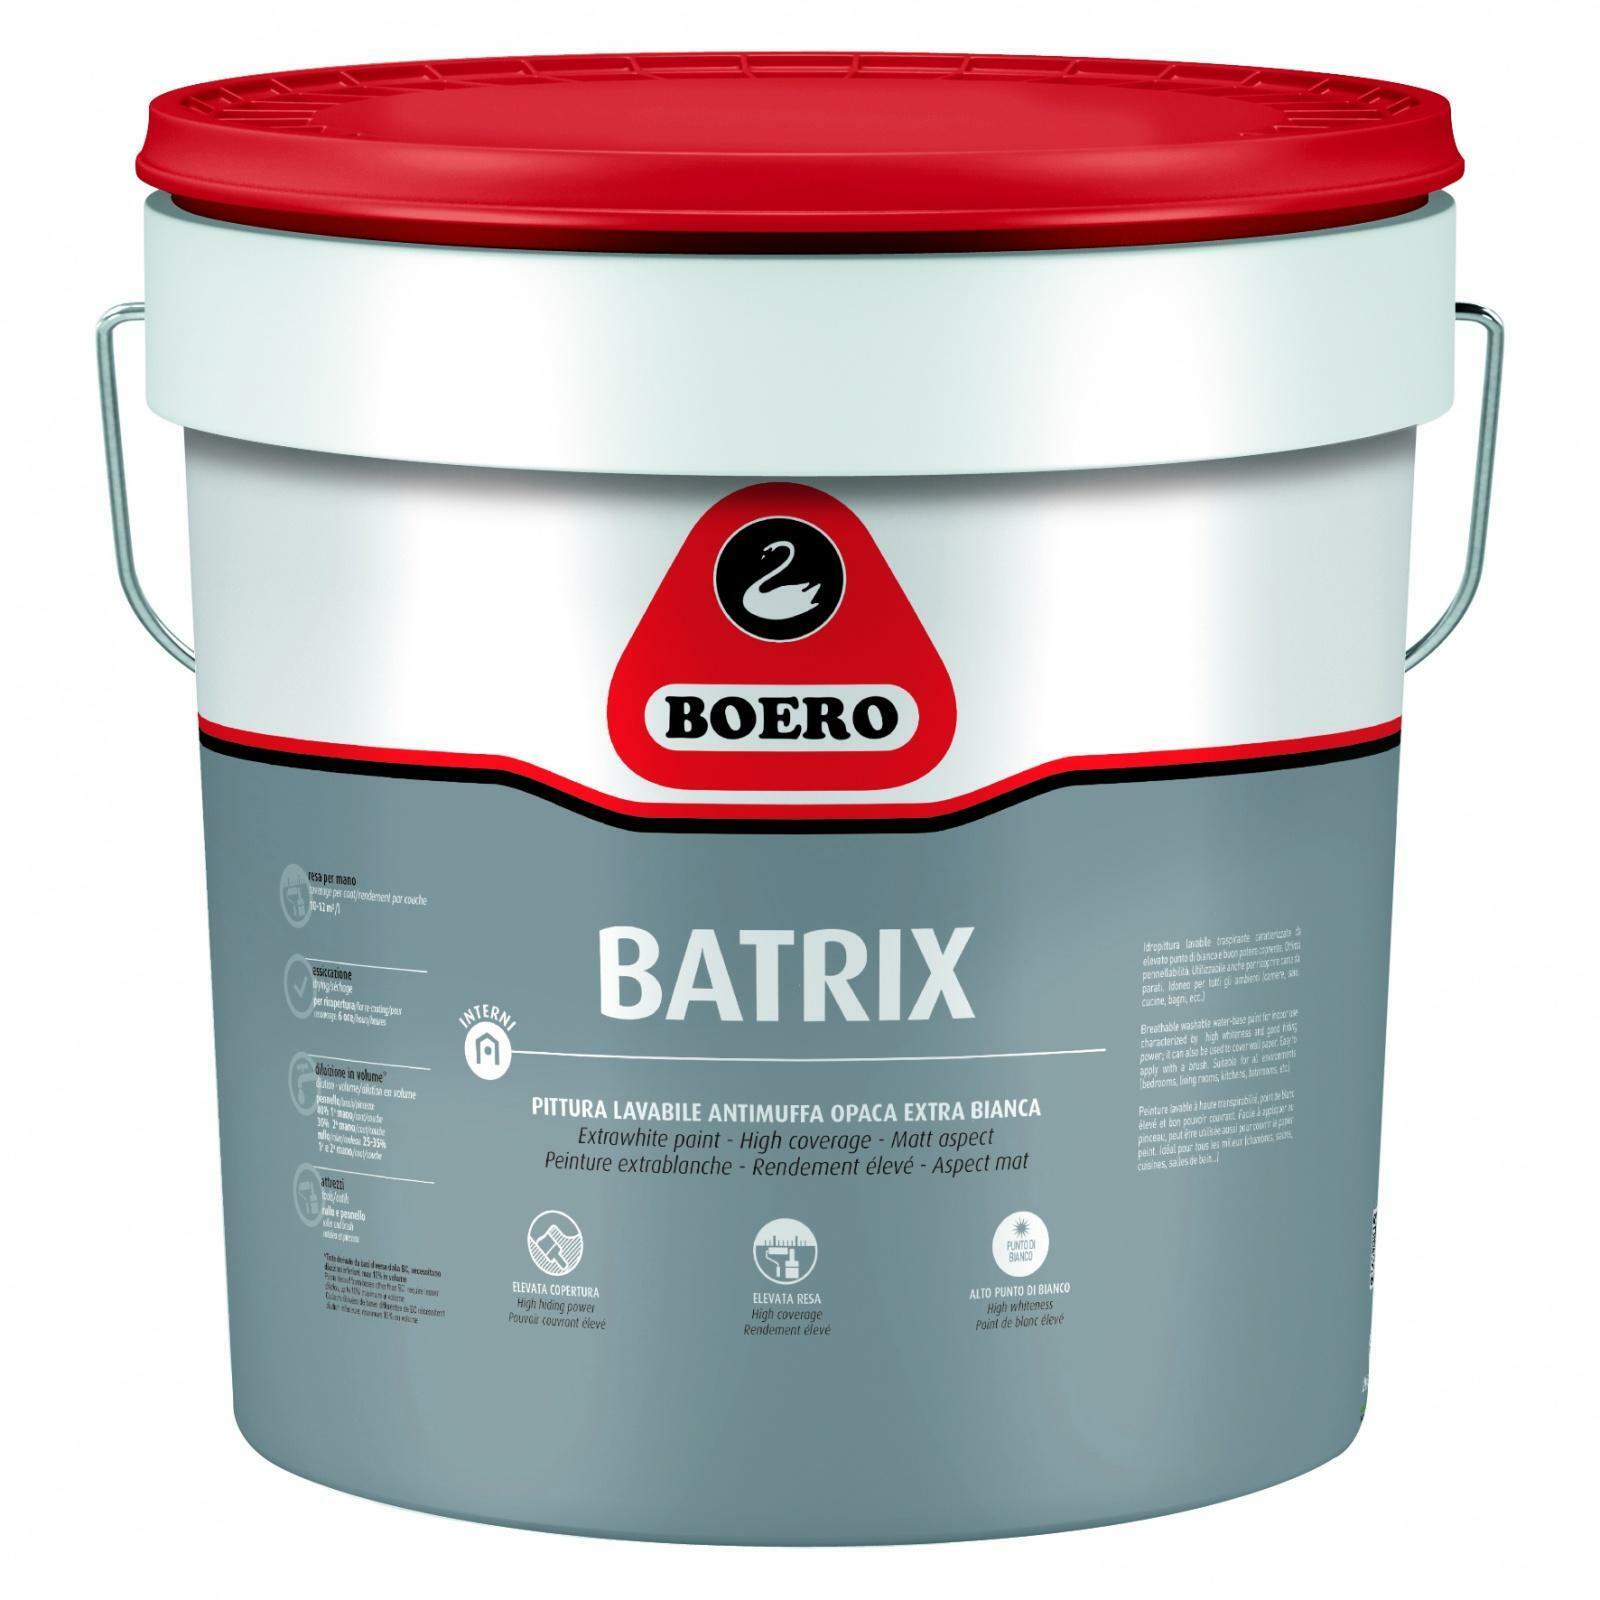 boero boero batrix pittura lavabile antimuffa 13 lt 345001